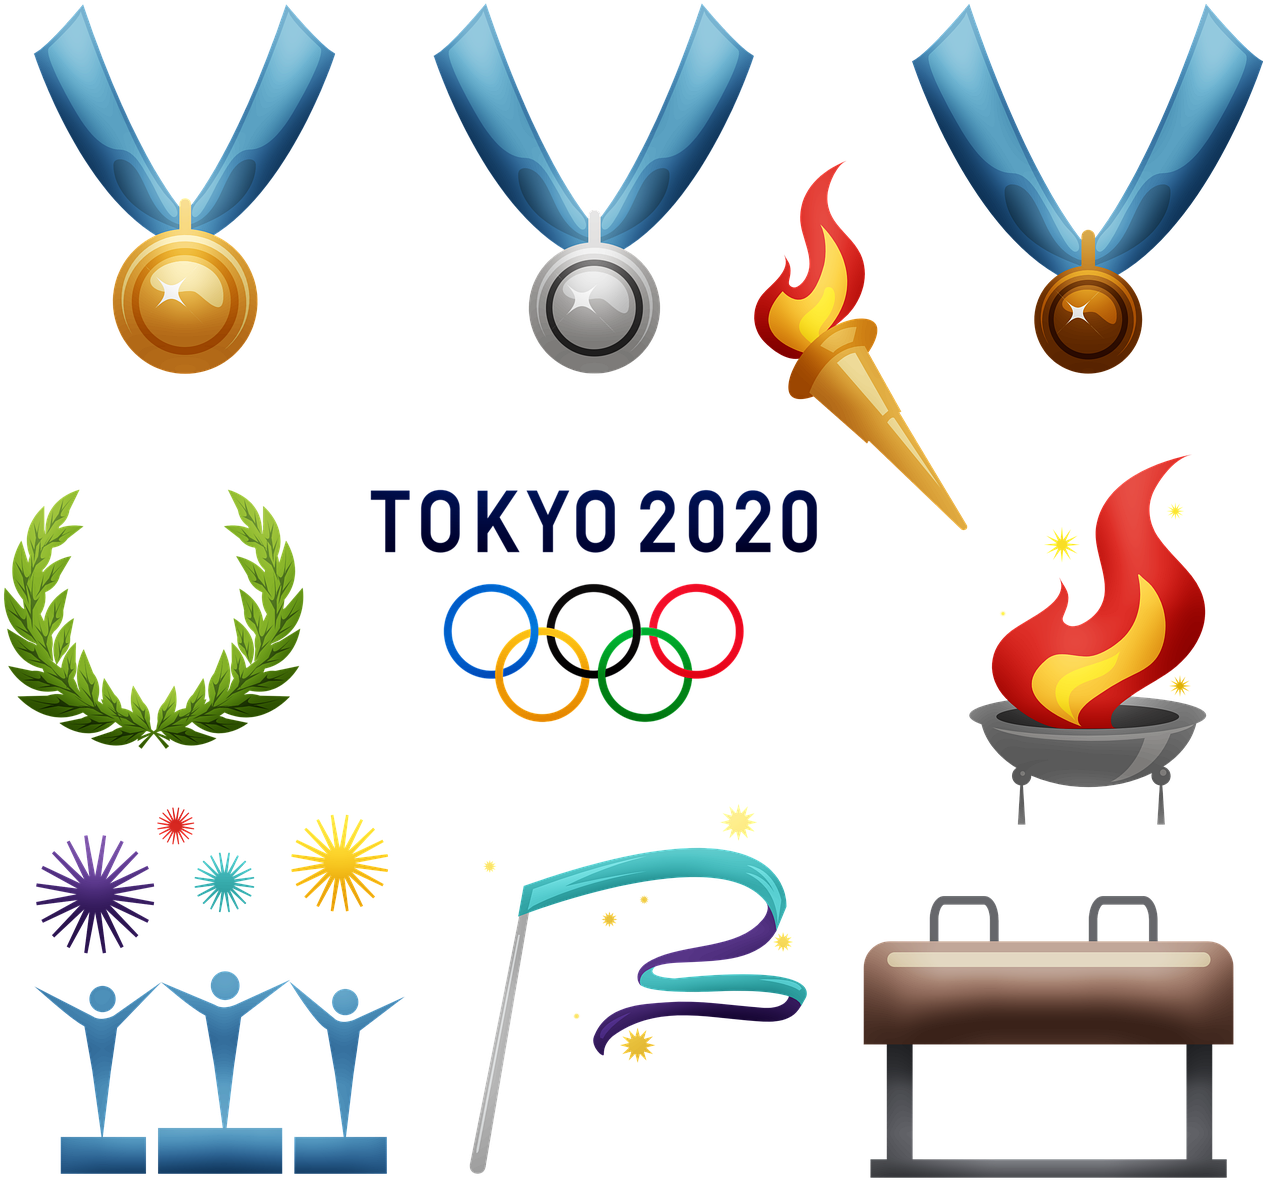 Tokyo2020 Olympics Icons Set PNG image